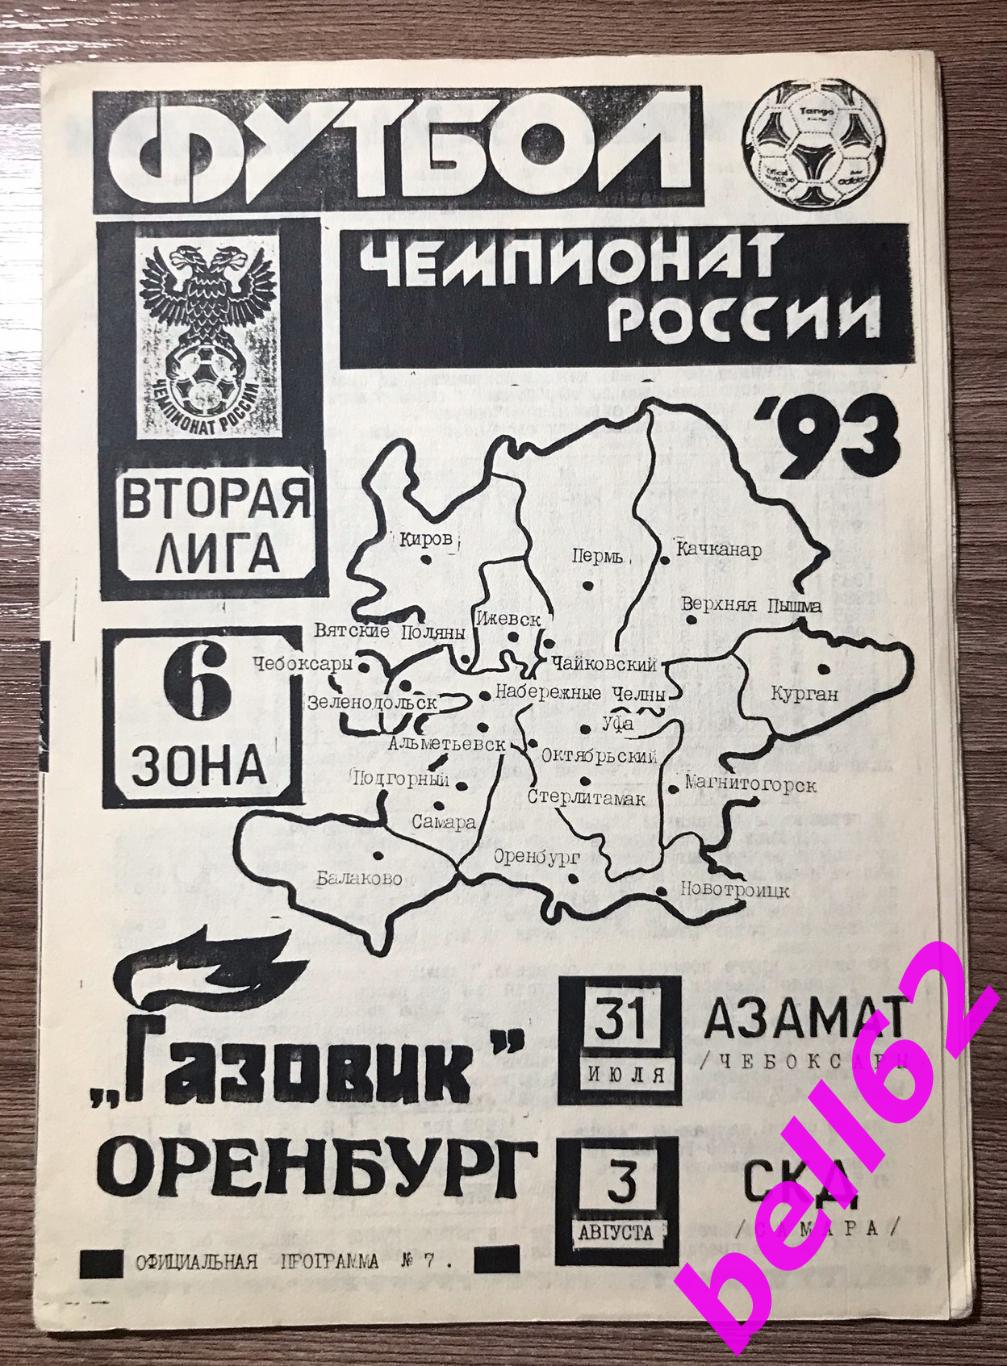 Газовик Оренбург-Азамат Чебоксары+ СКД Самара-31.07./03.08.1993 г.